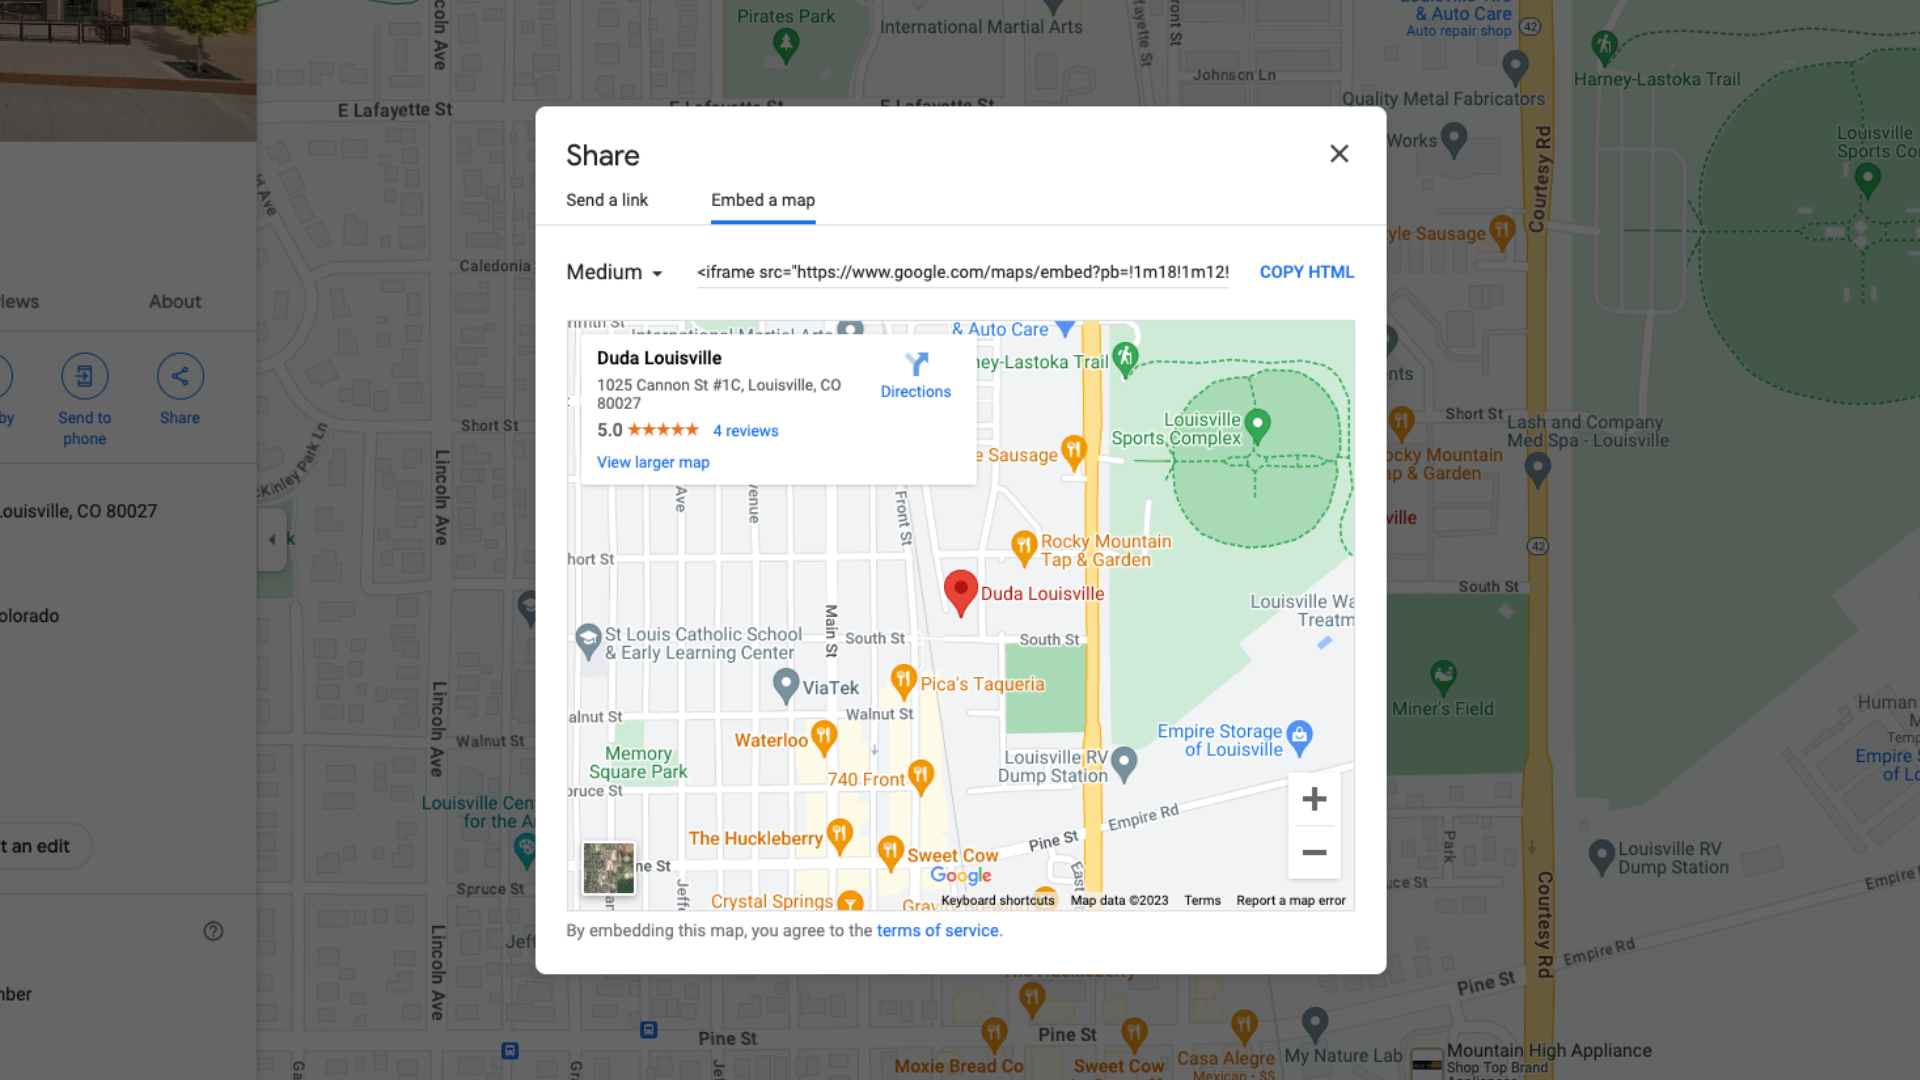 A screenshot of Google Maps showing the 